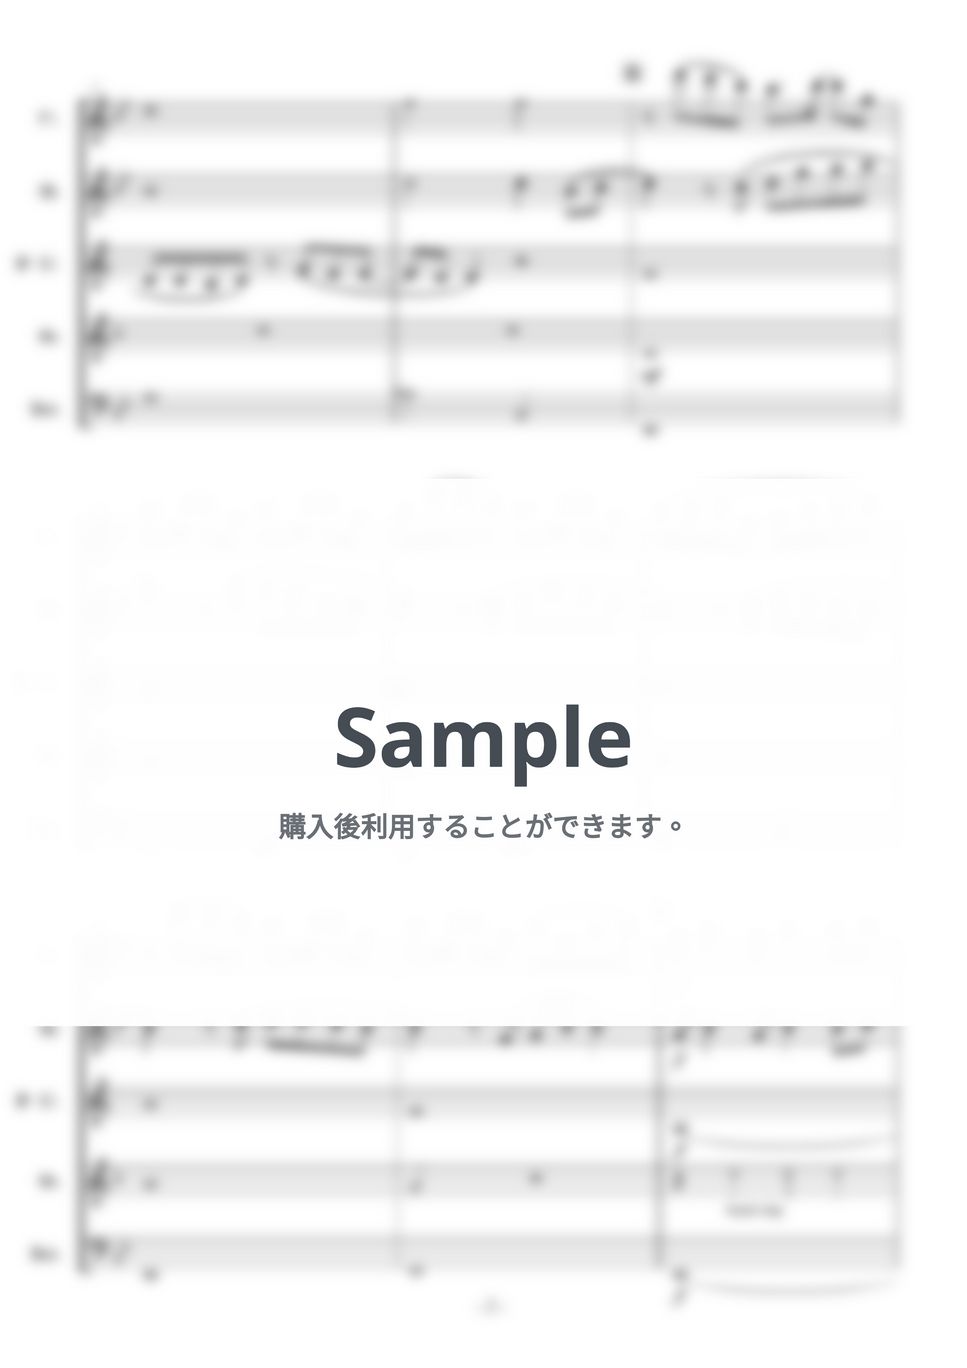 ayase - 群青【木管五重奏】 (スコア+パート譜) by いたちの楽譜屋さん